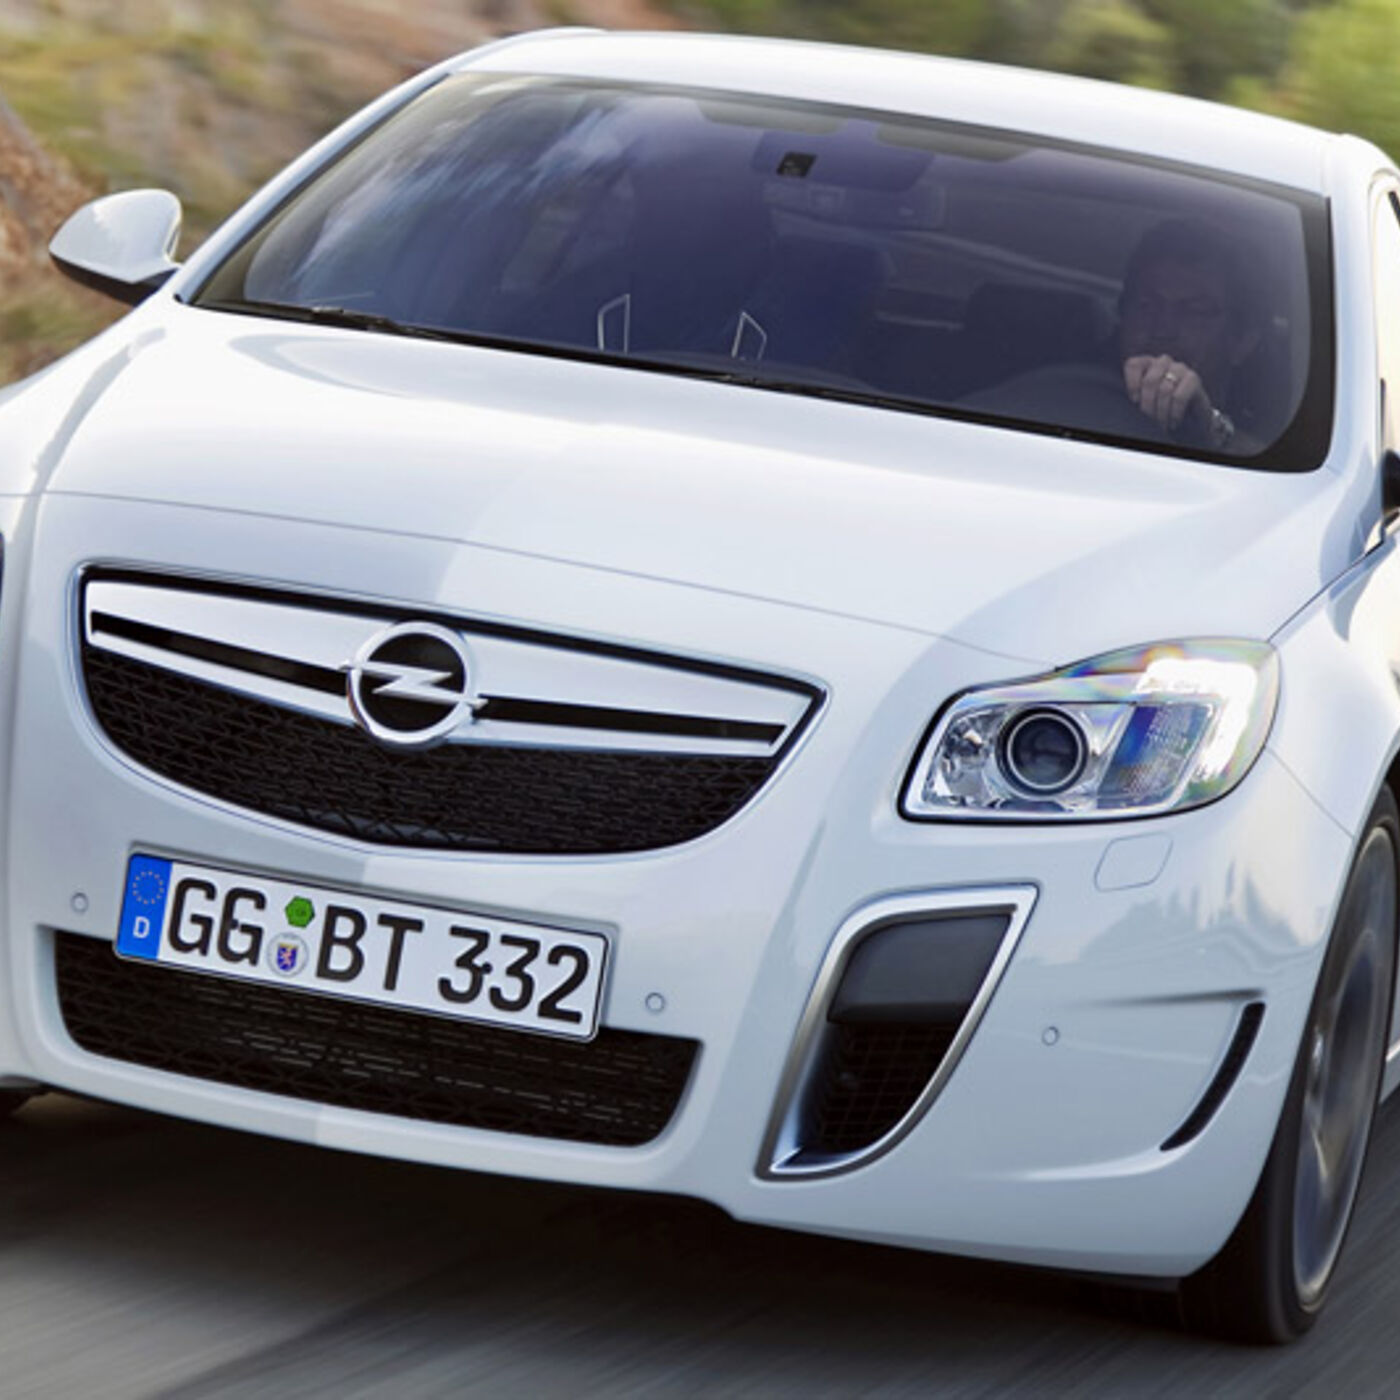 Aflevering 54 - De Opel Insignia OPC